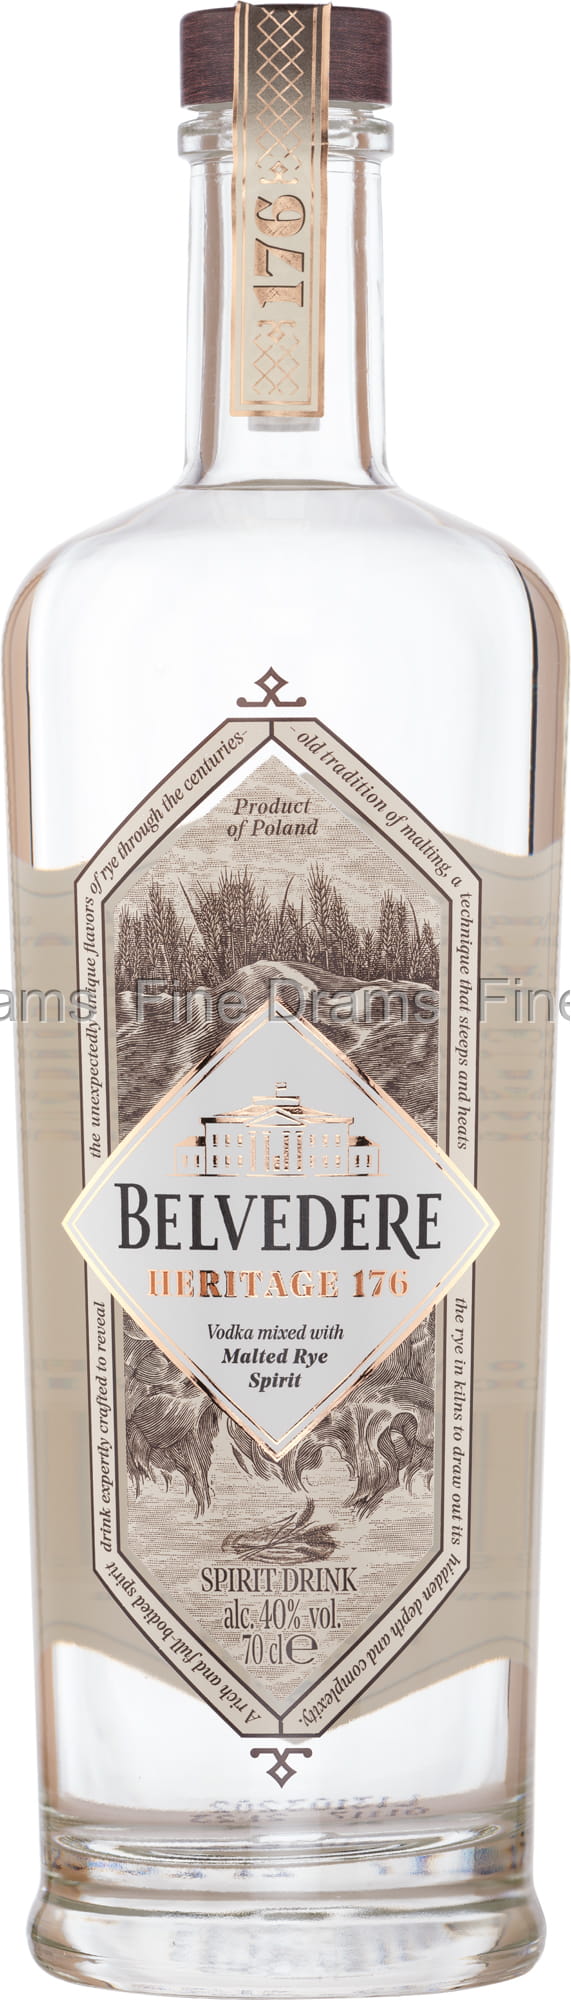 Belvedere Heritage 176 Vodka  prices, stores, tasting notes